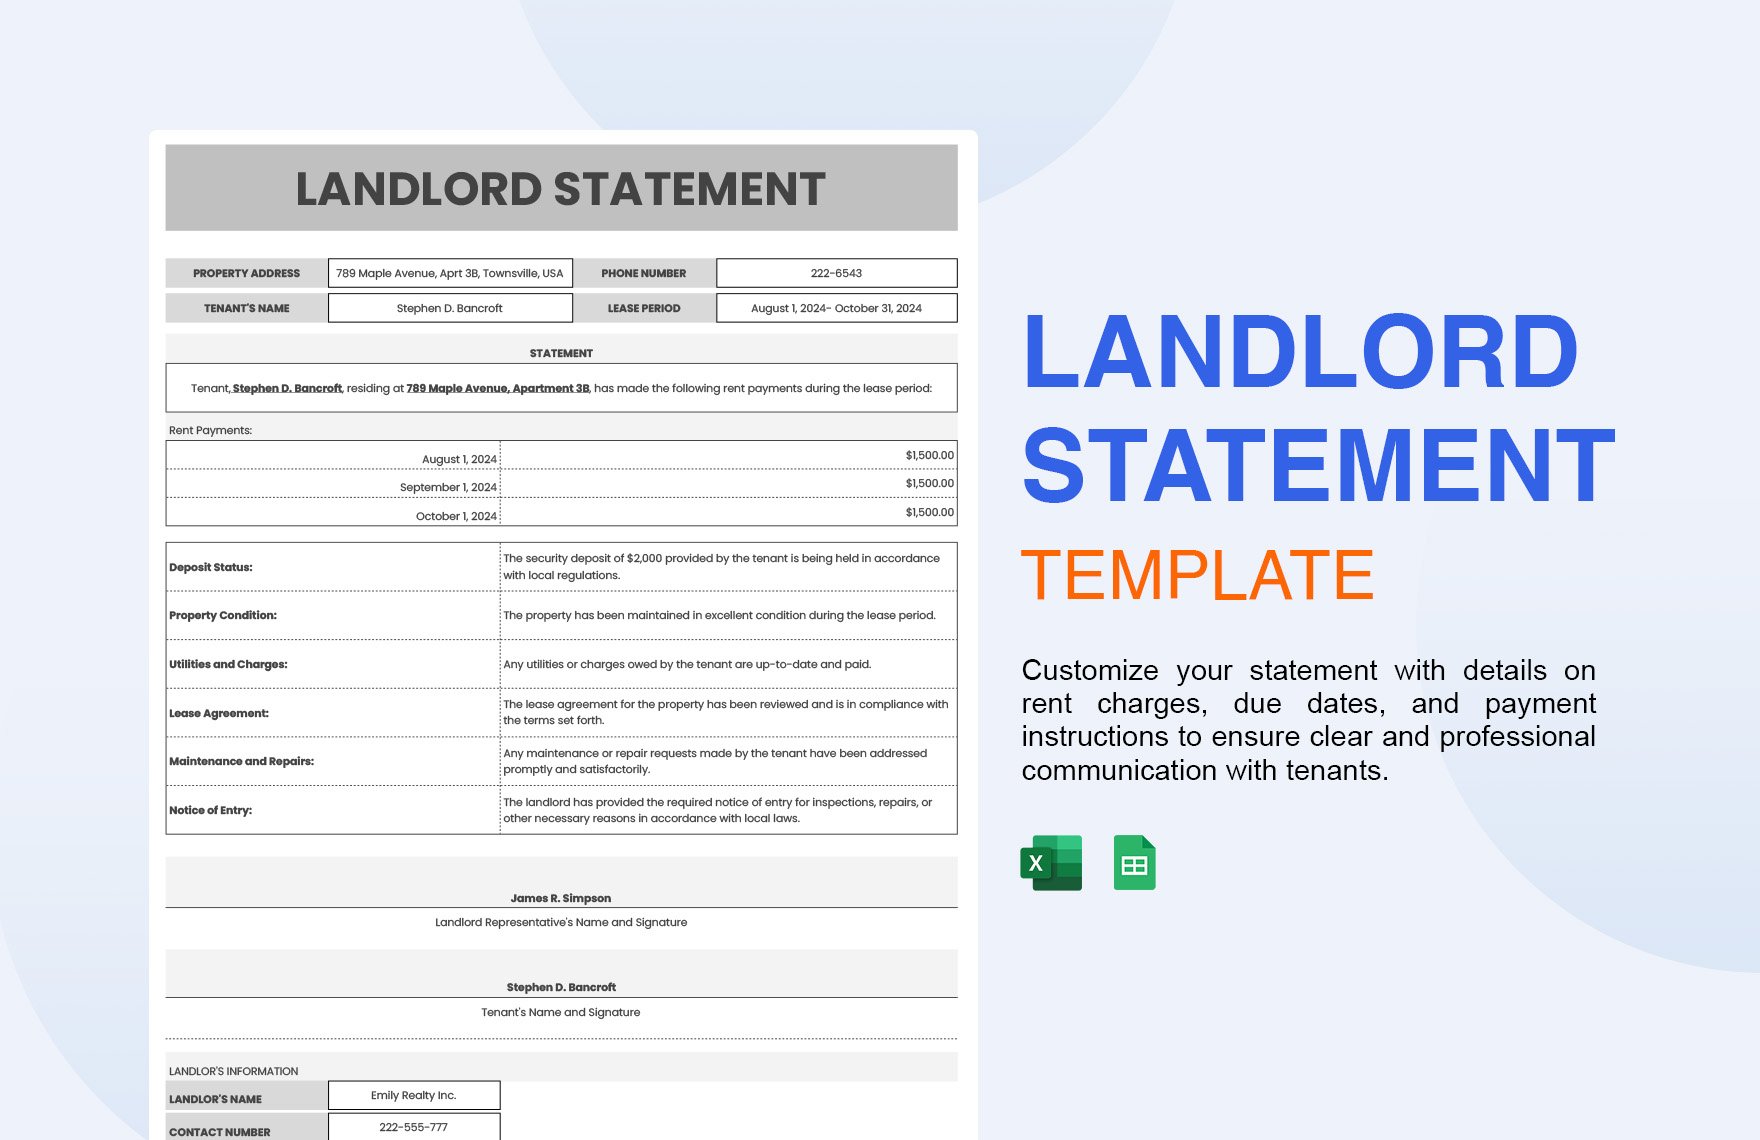 Landlord Statement Template